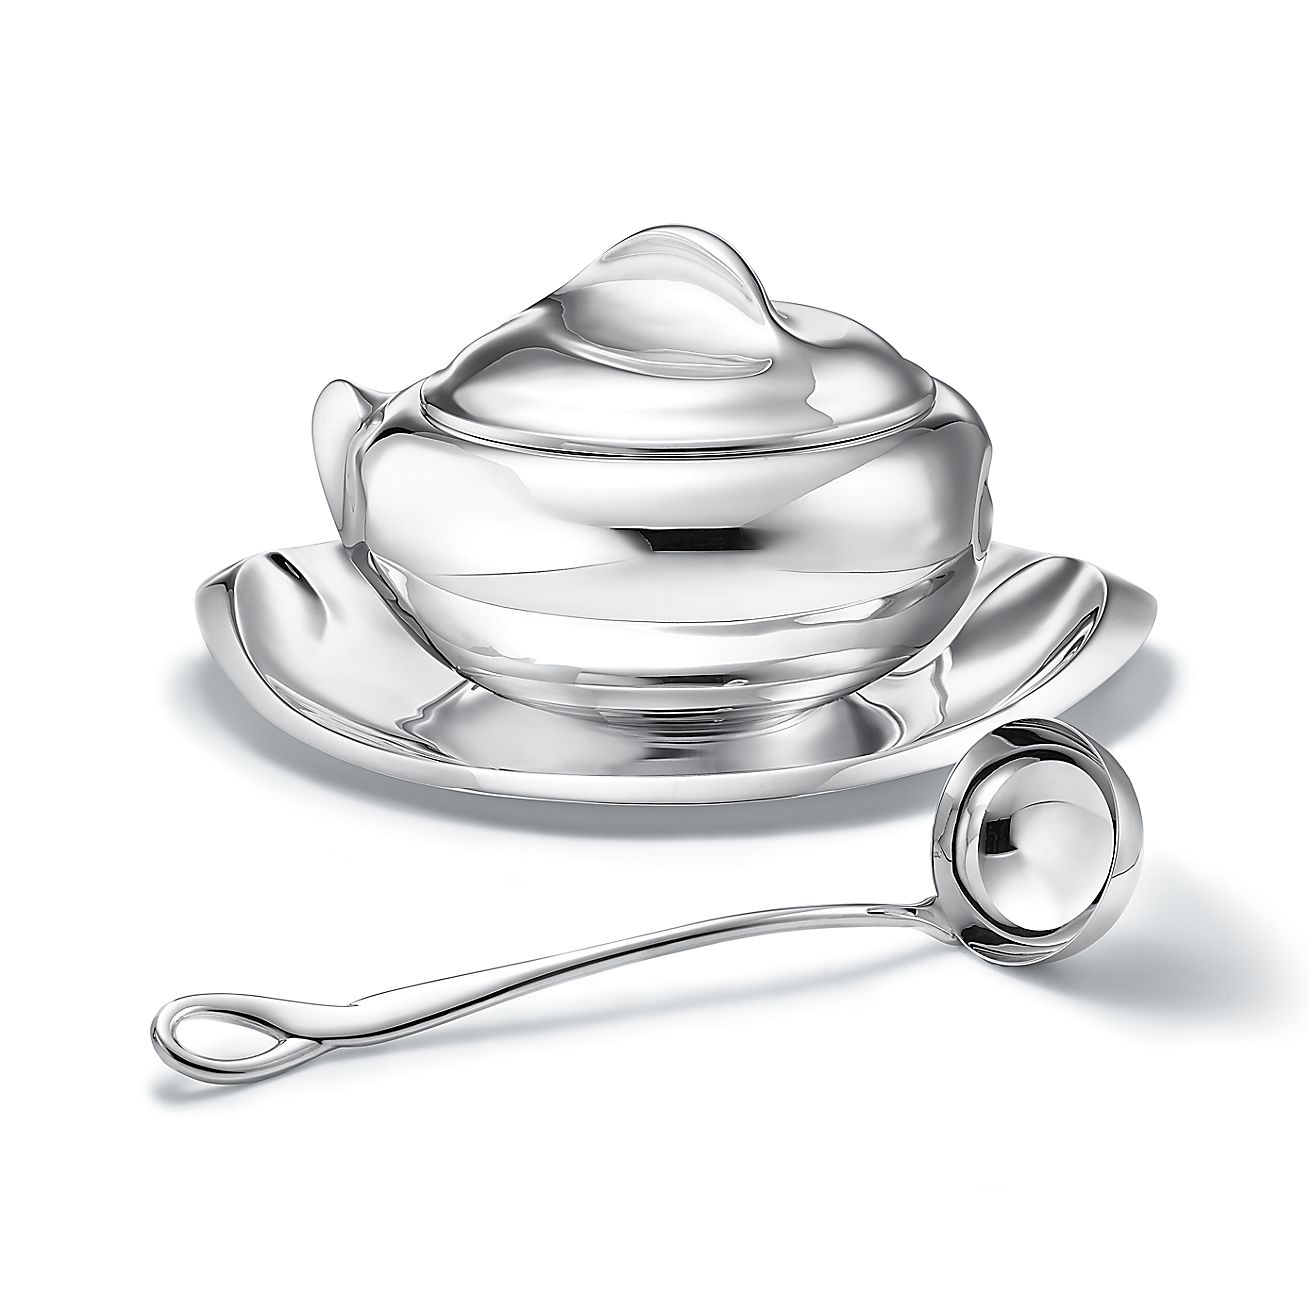 Elsa Peretti® Thumbprint salt and pepper shakers. Silver. | Tiffany & Co.